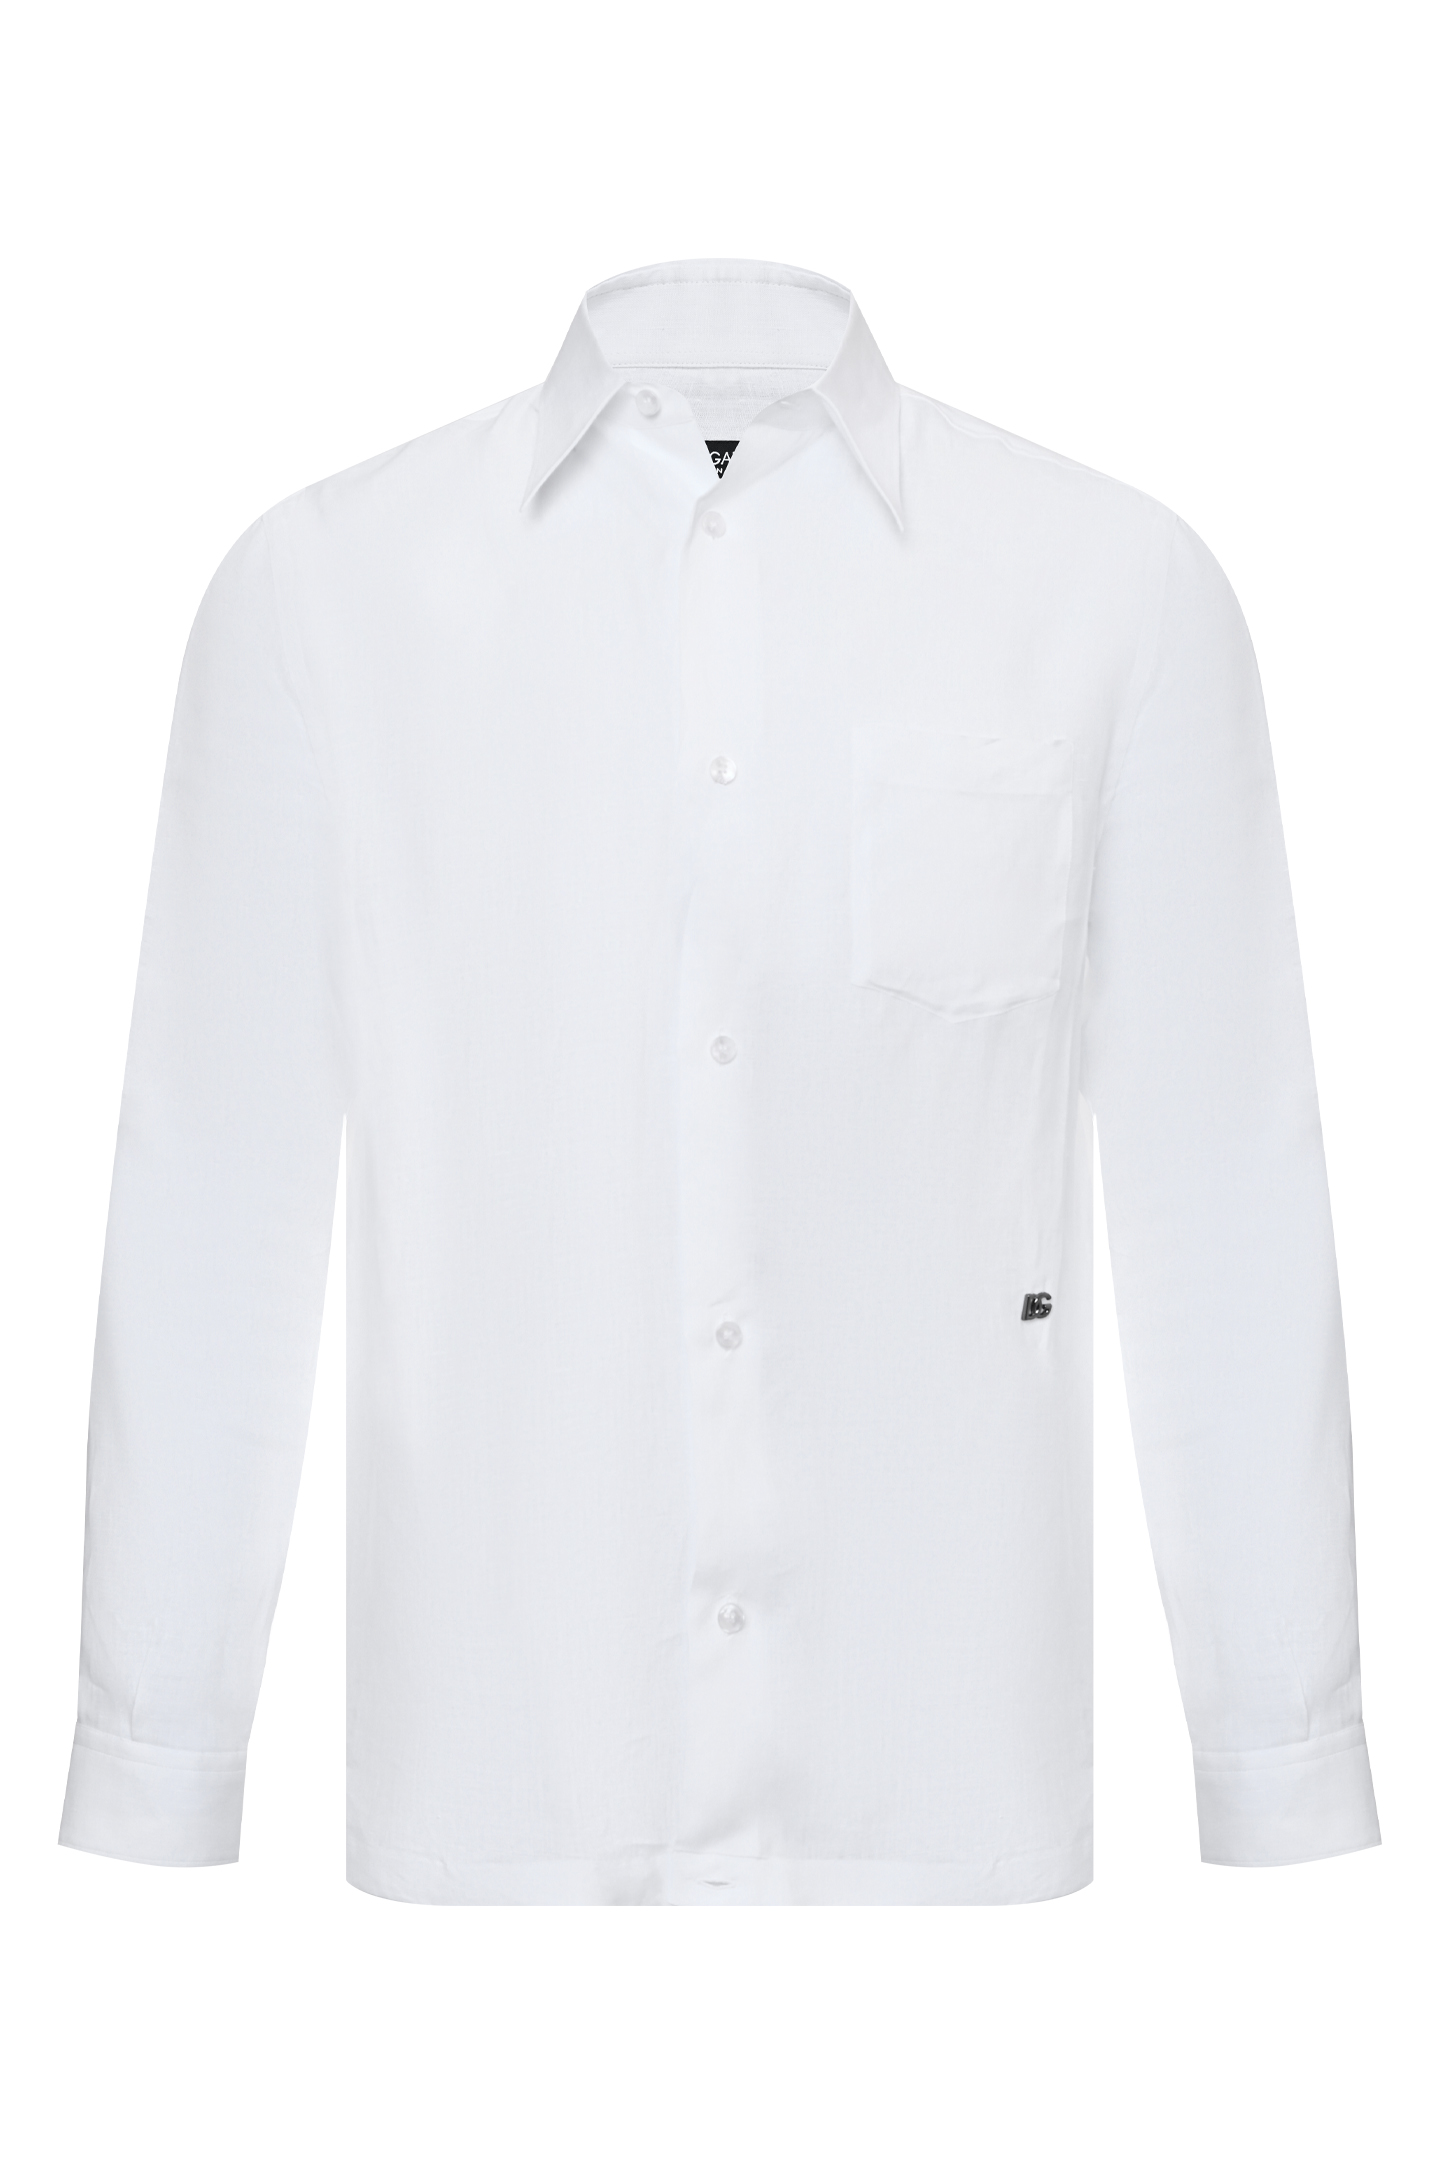 Рубашка DOLCE & GABBANA G5KJ0T FU4IK, цвет: Белый, Мужской